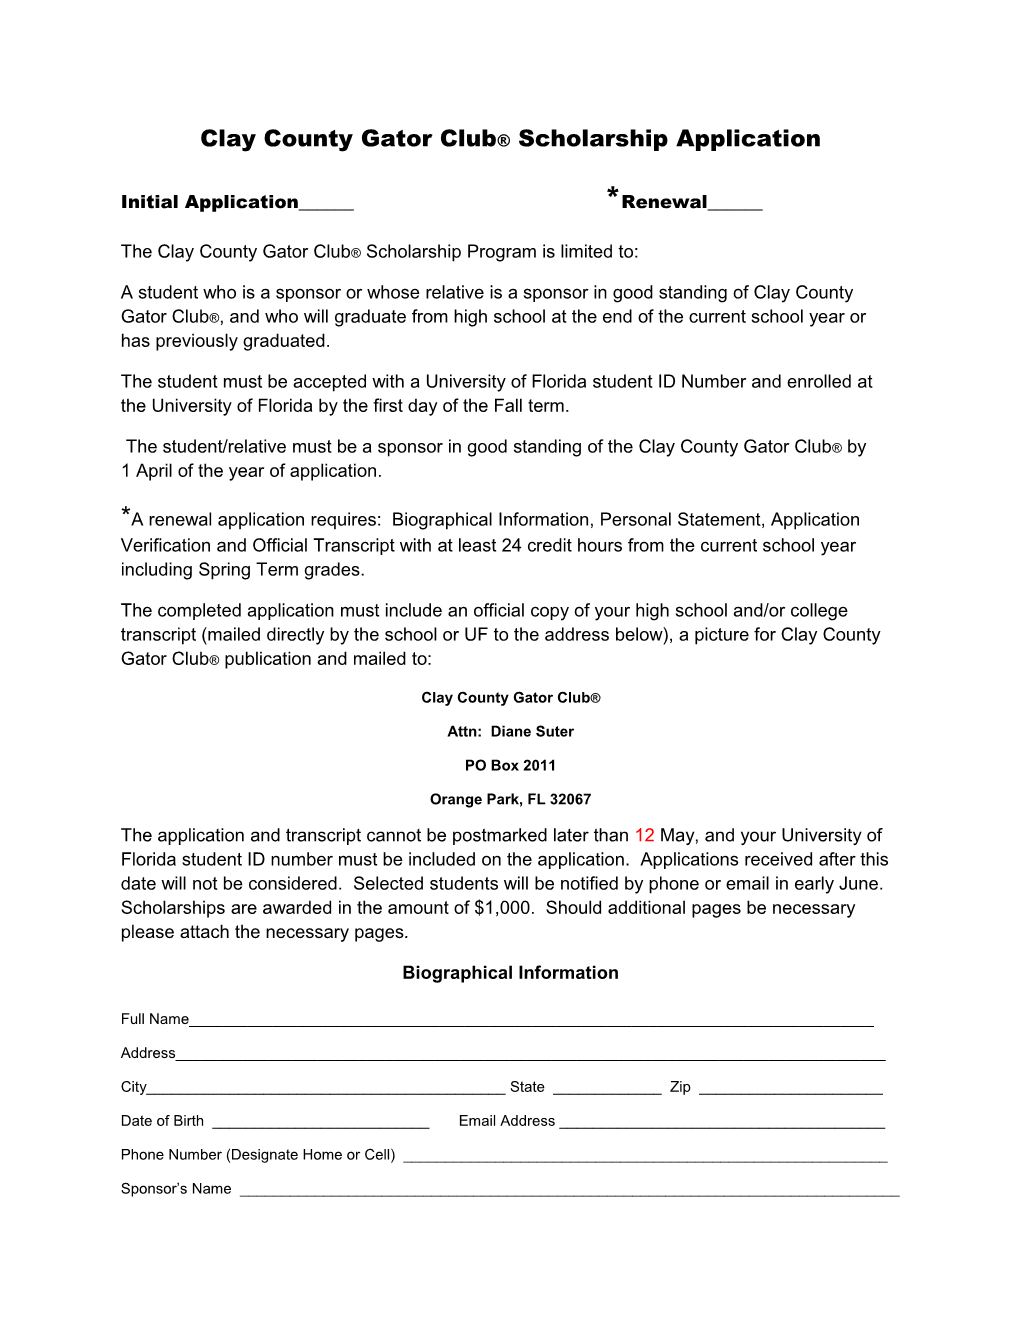 Clay County Gator Club Scholarship Application